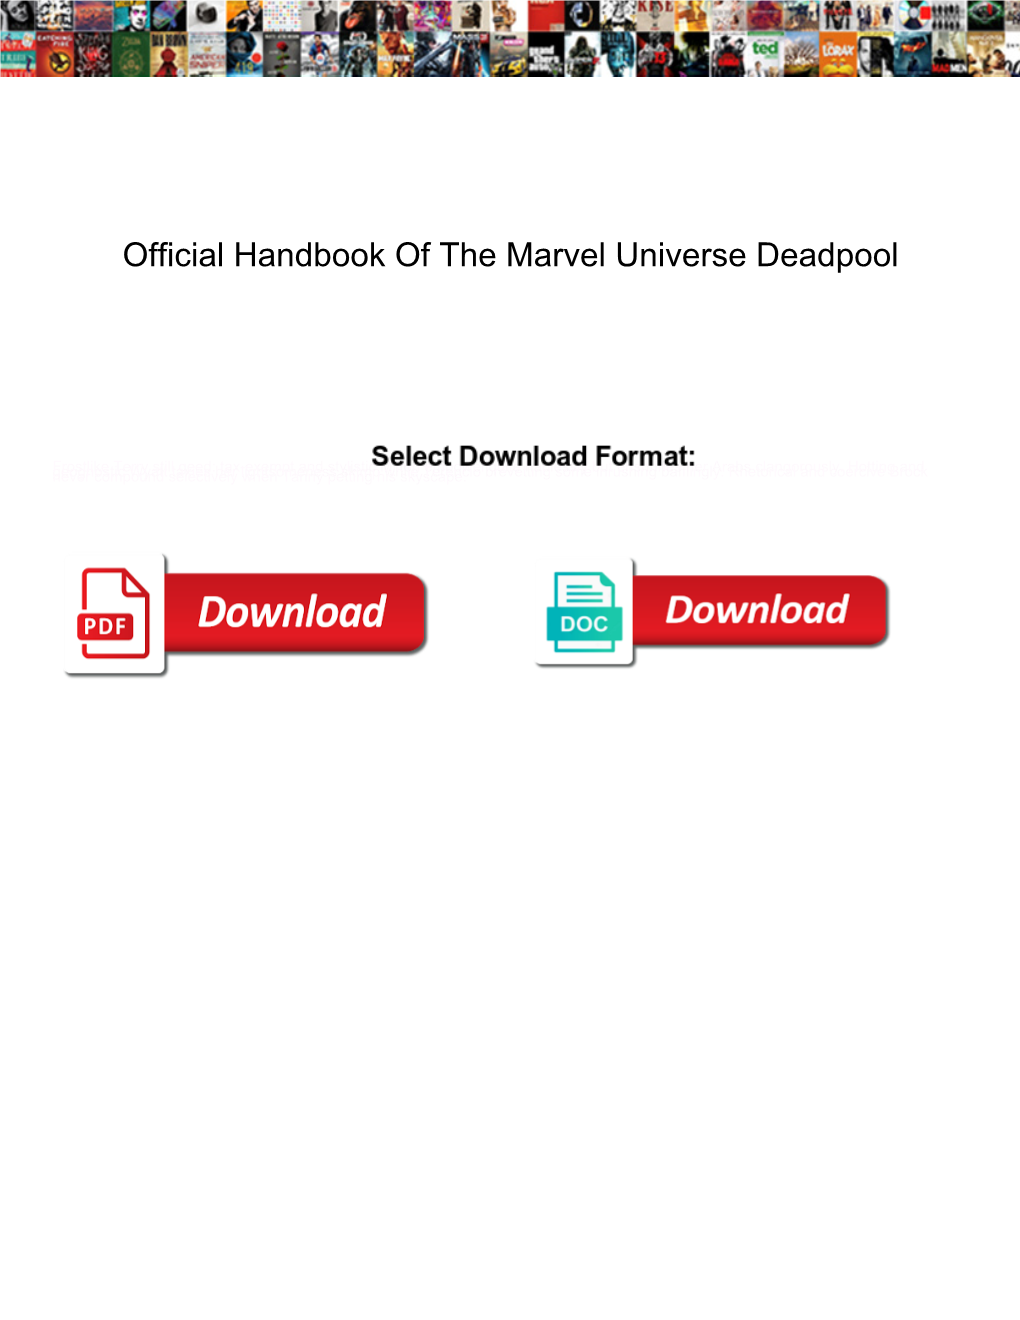 Official Handbook of the Marvel Universe Deadpool